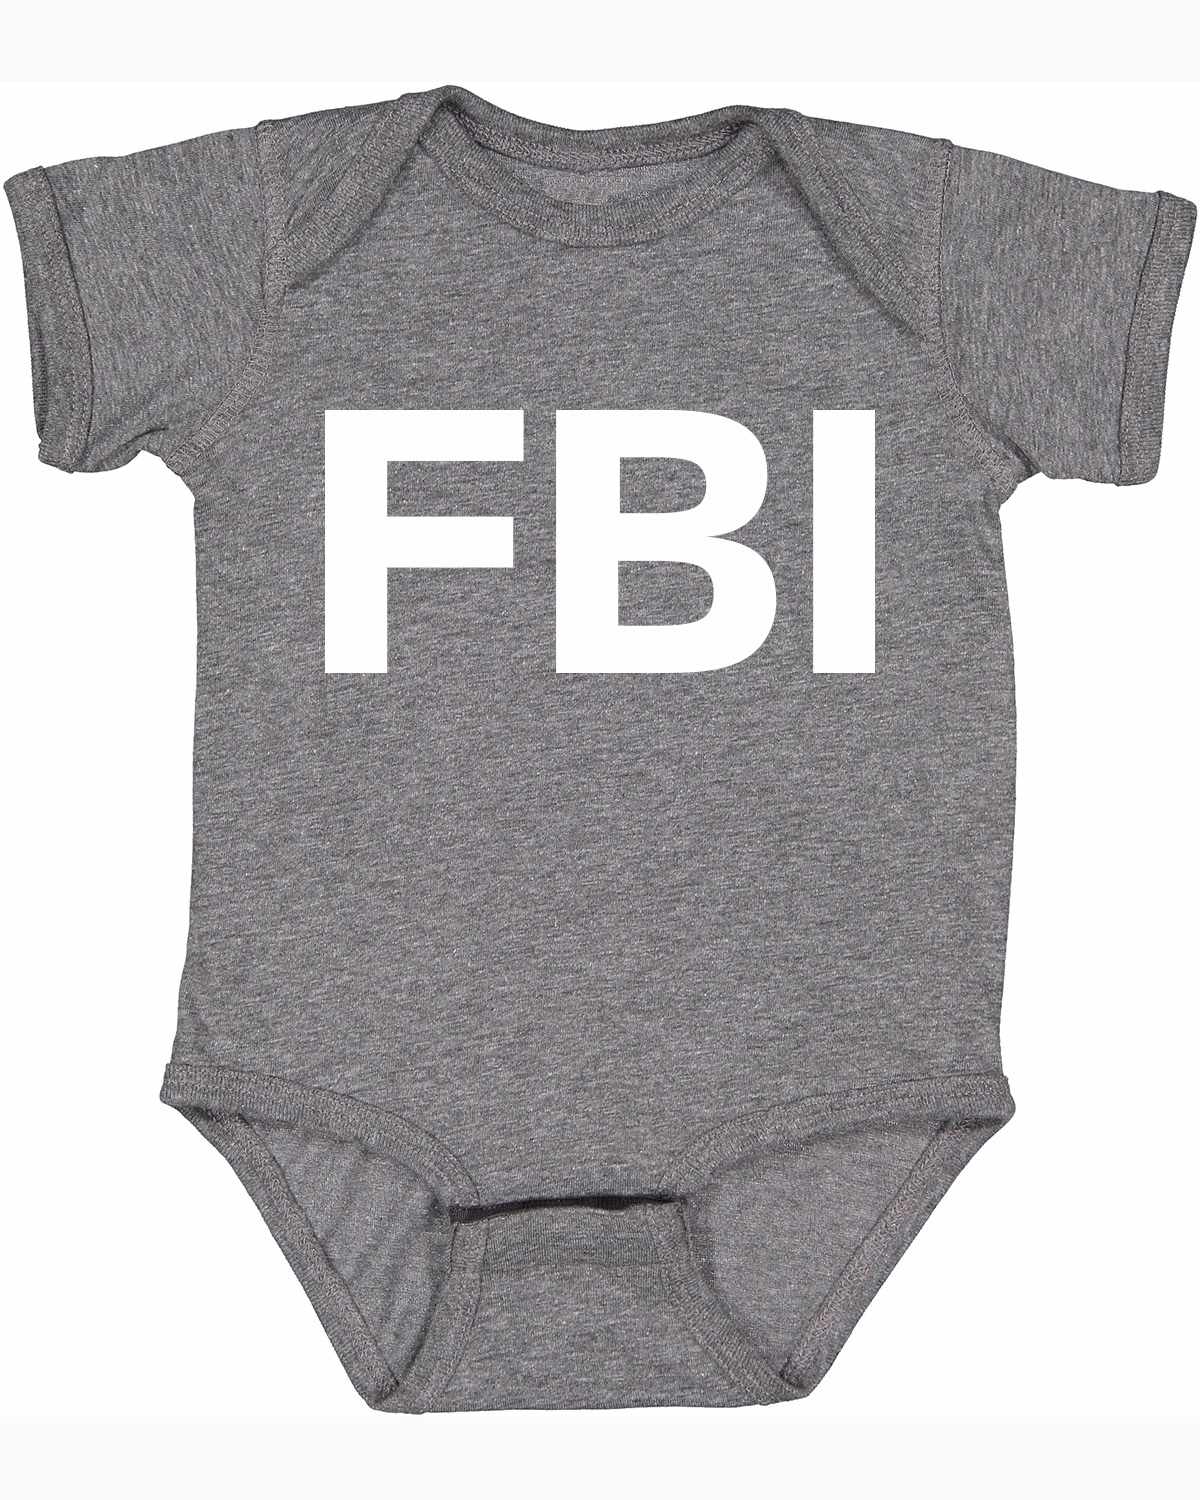 FBI Infant BodySuit (#402-10)